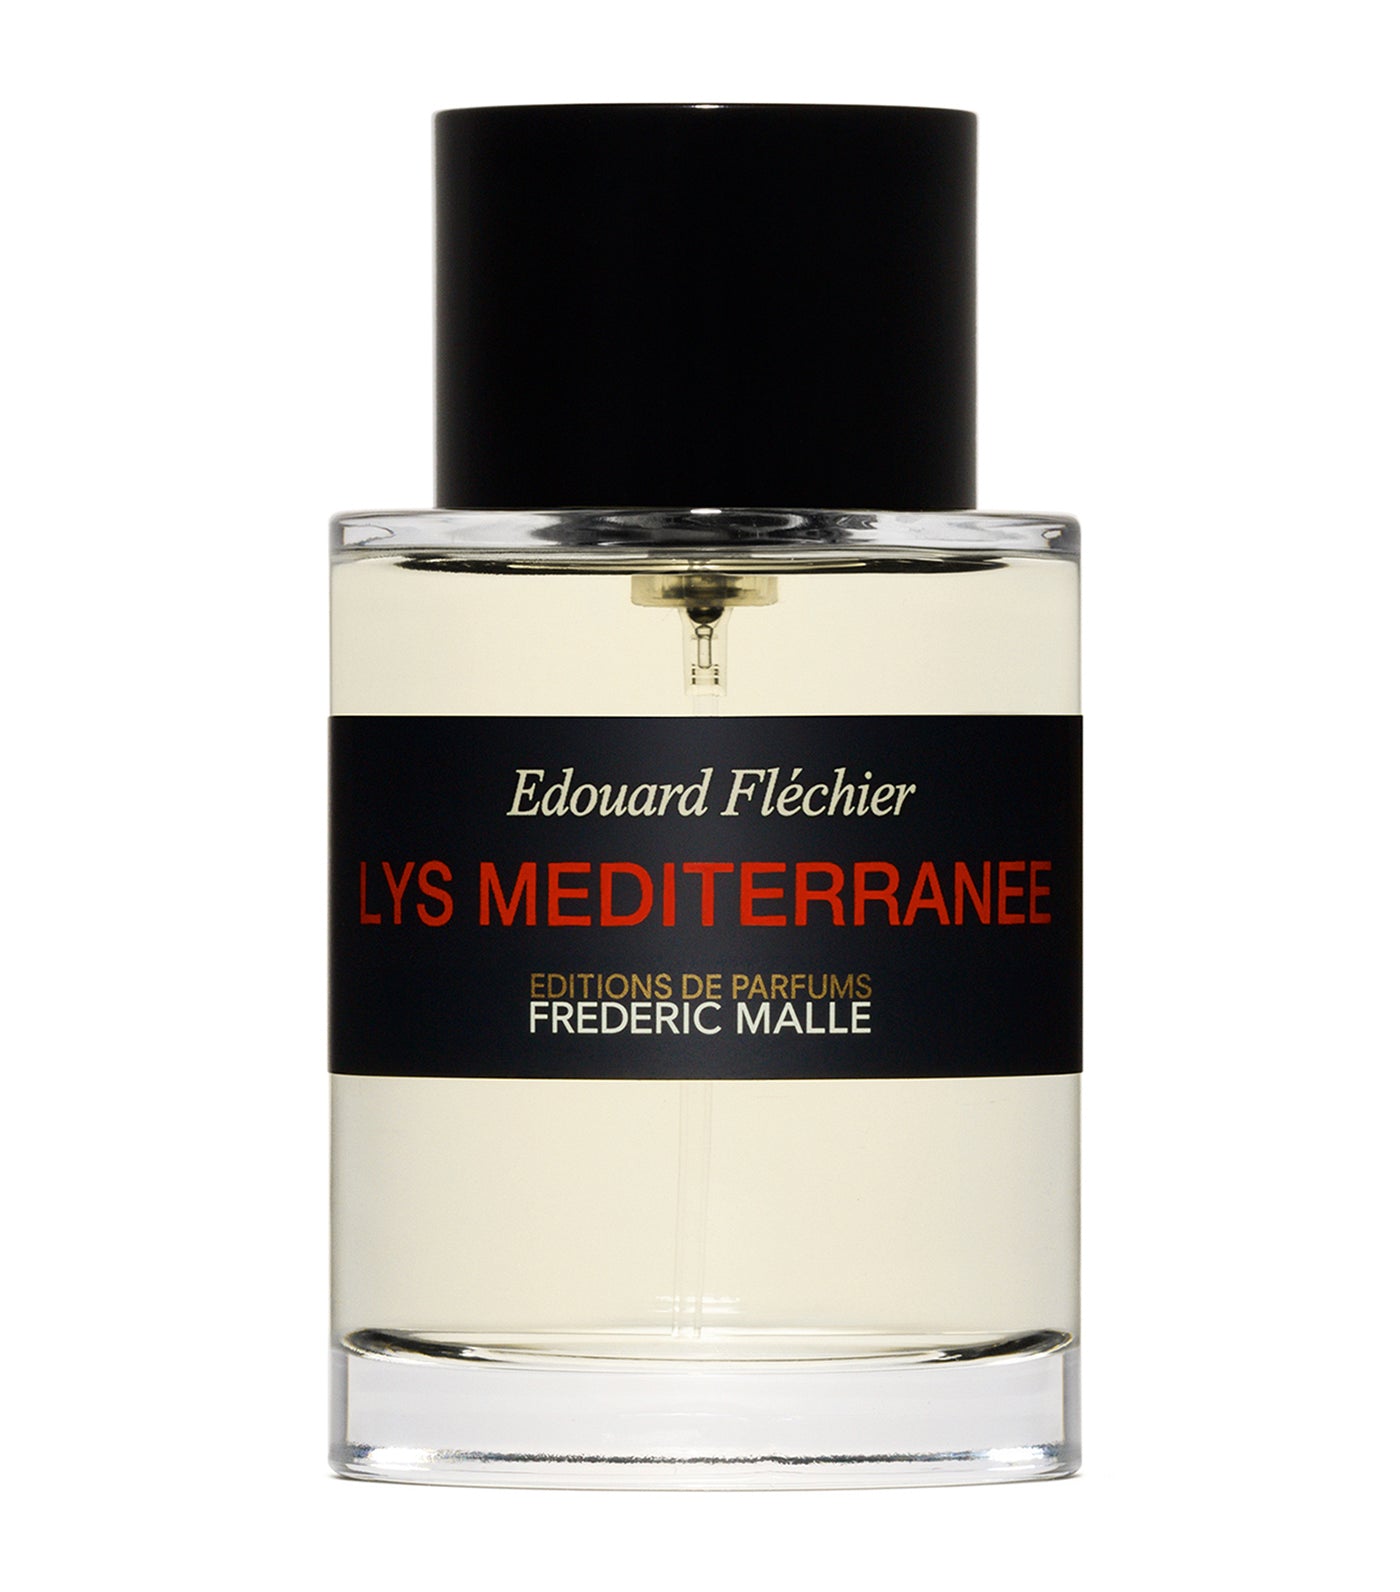 Lys Mediterranee Perfume by Edouard Fléchier